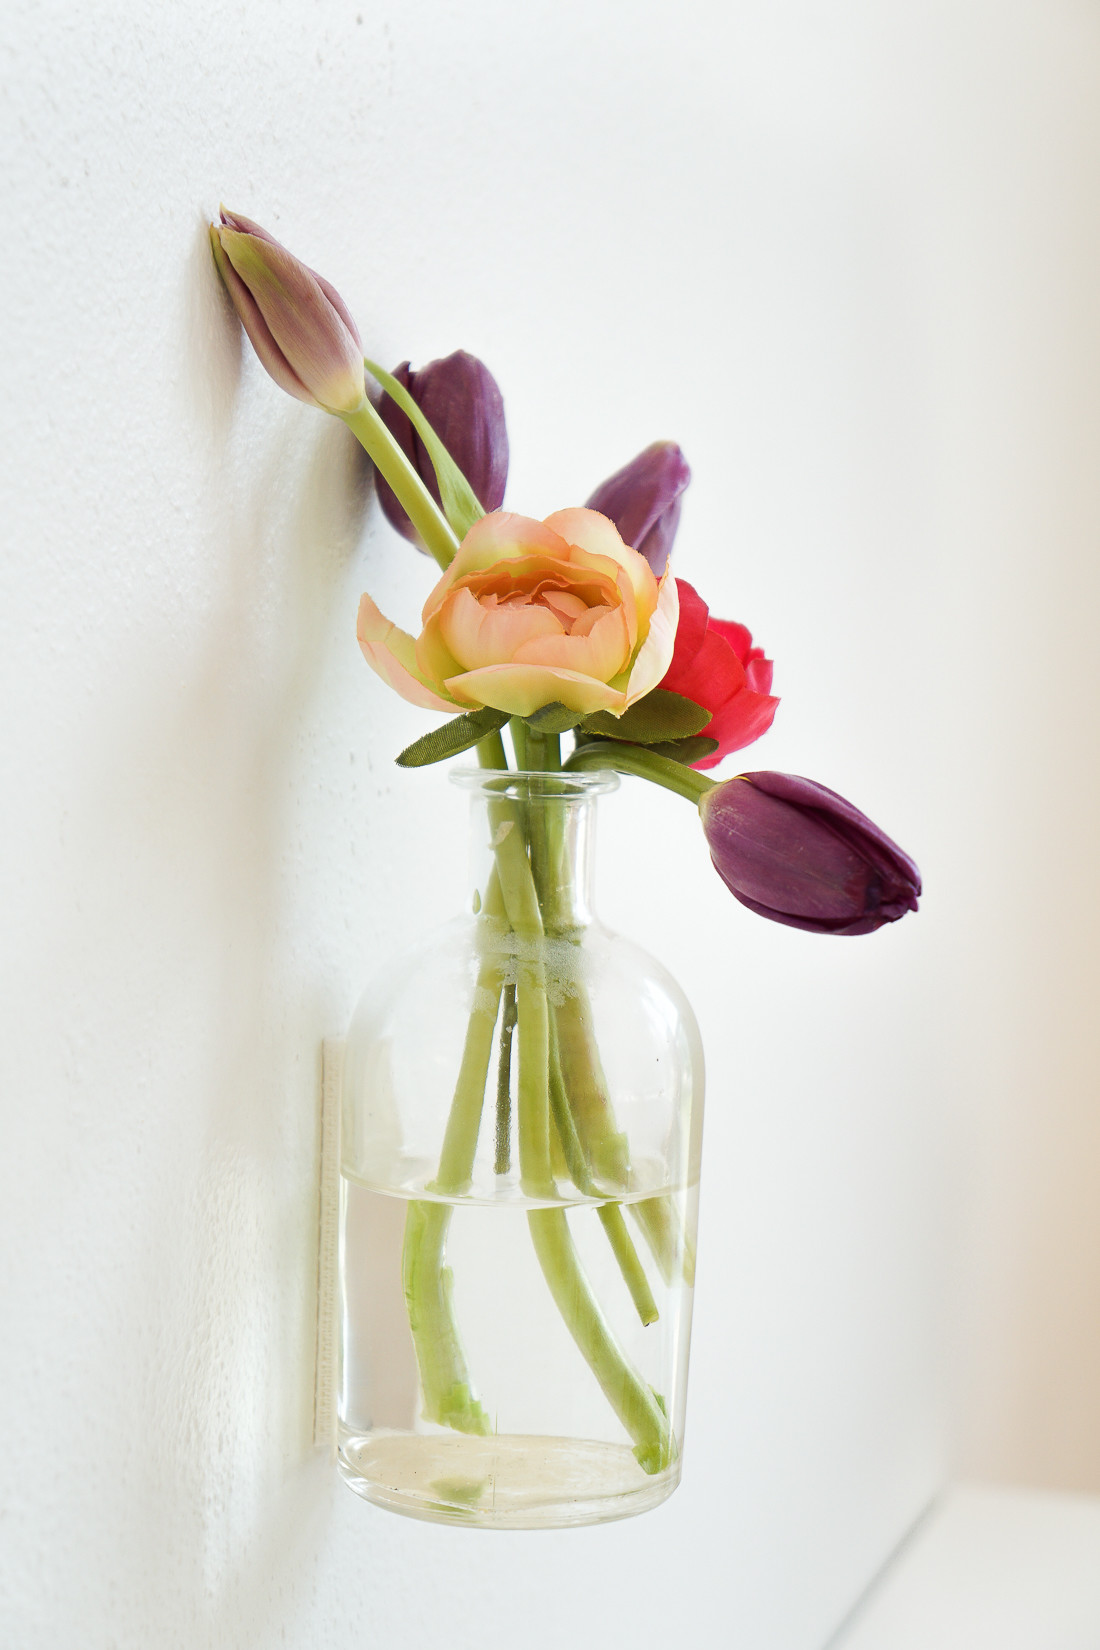 Blush Pink Flowers In Vase Of Glass Wall Vases for Flowers Zef Jam In Diy Wall Vase Francois Et Moi